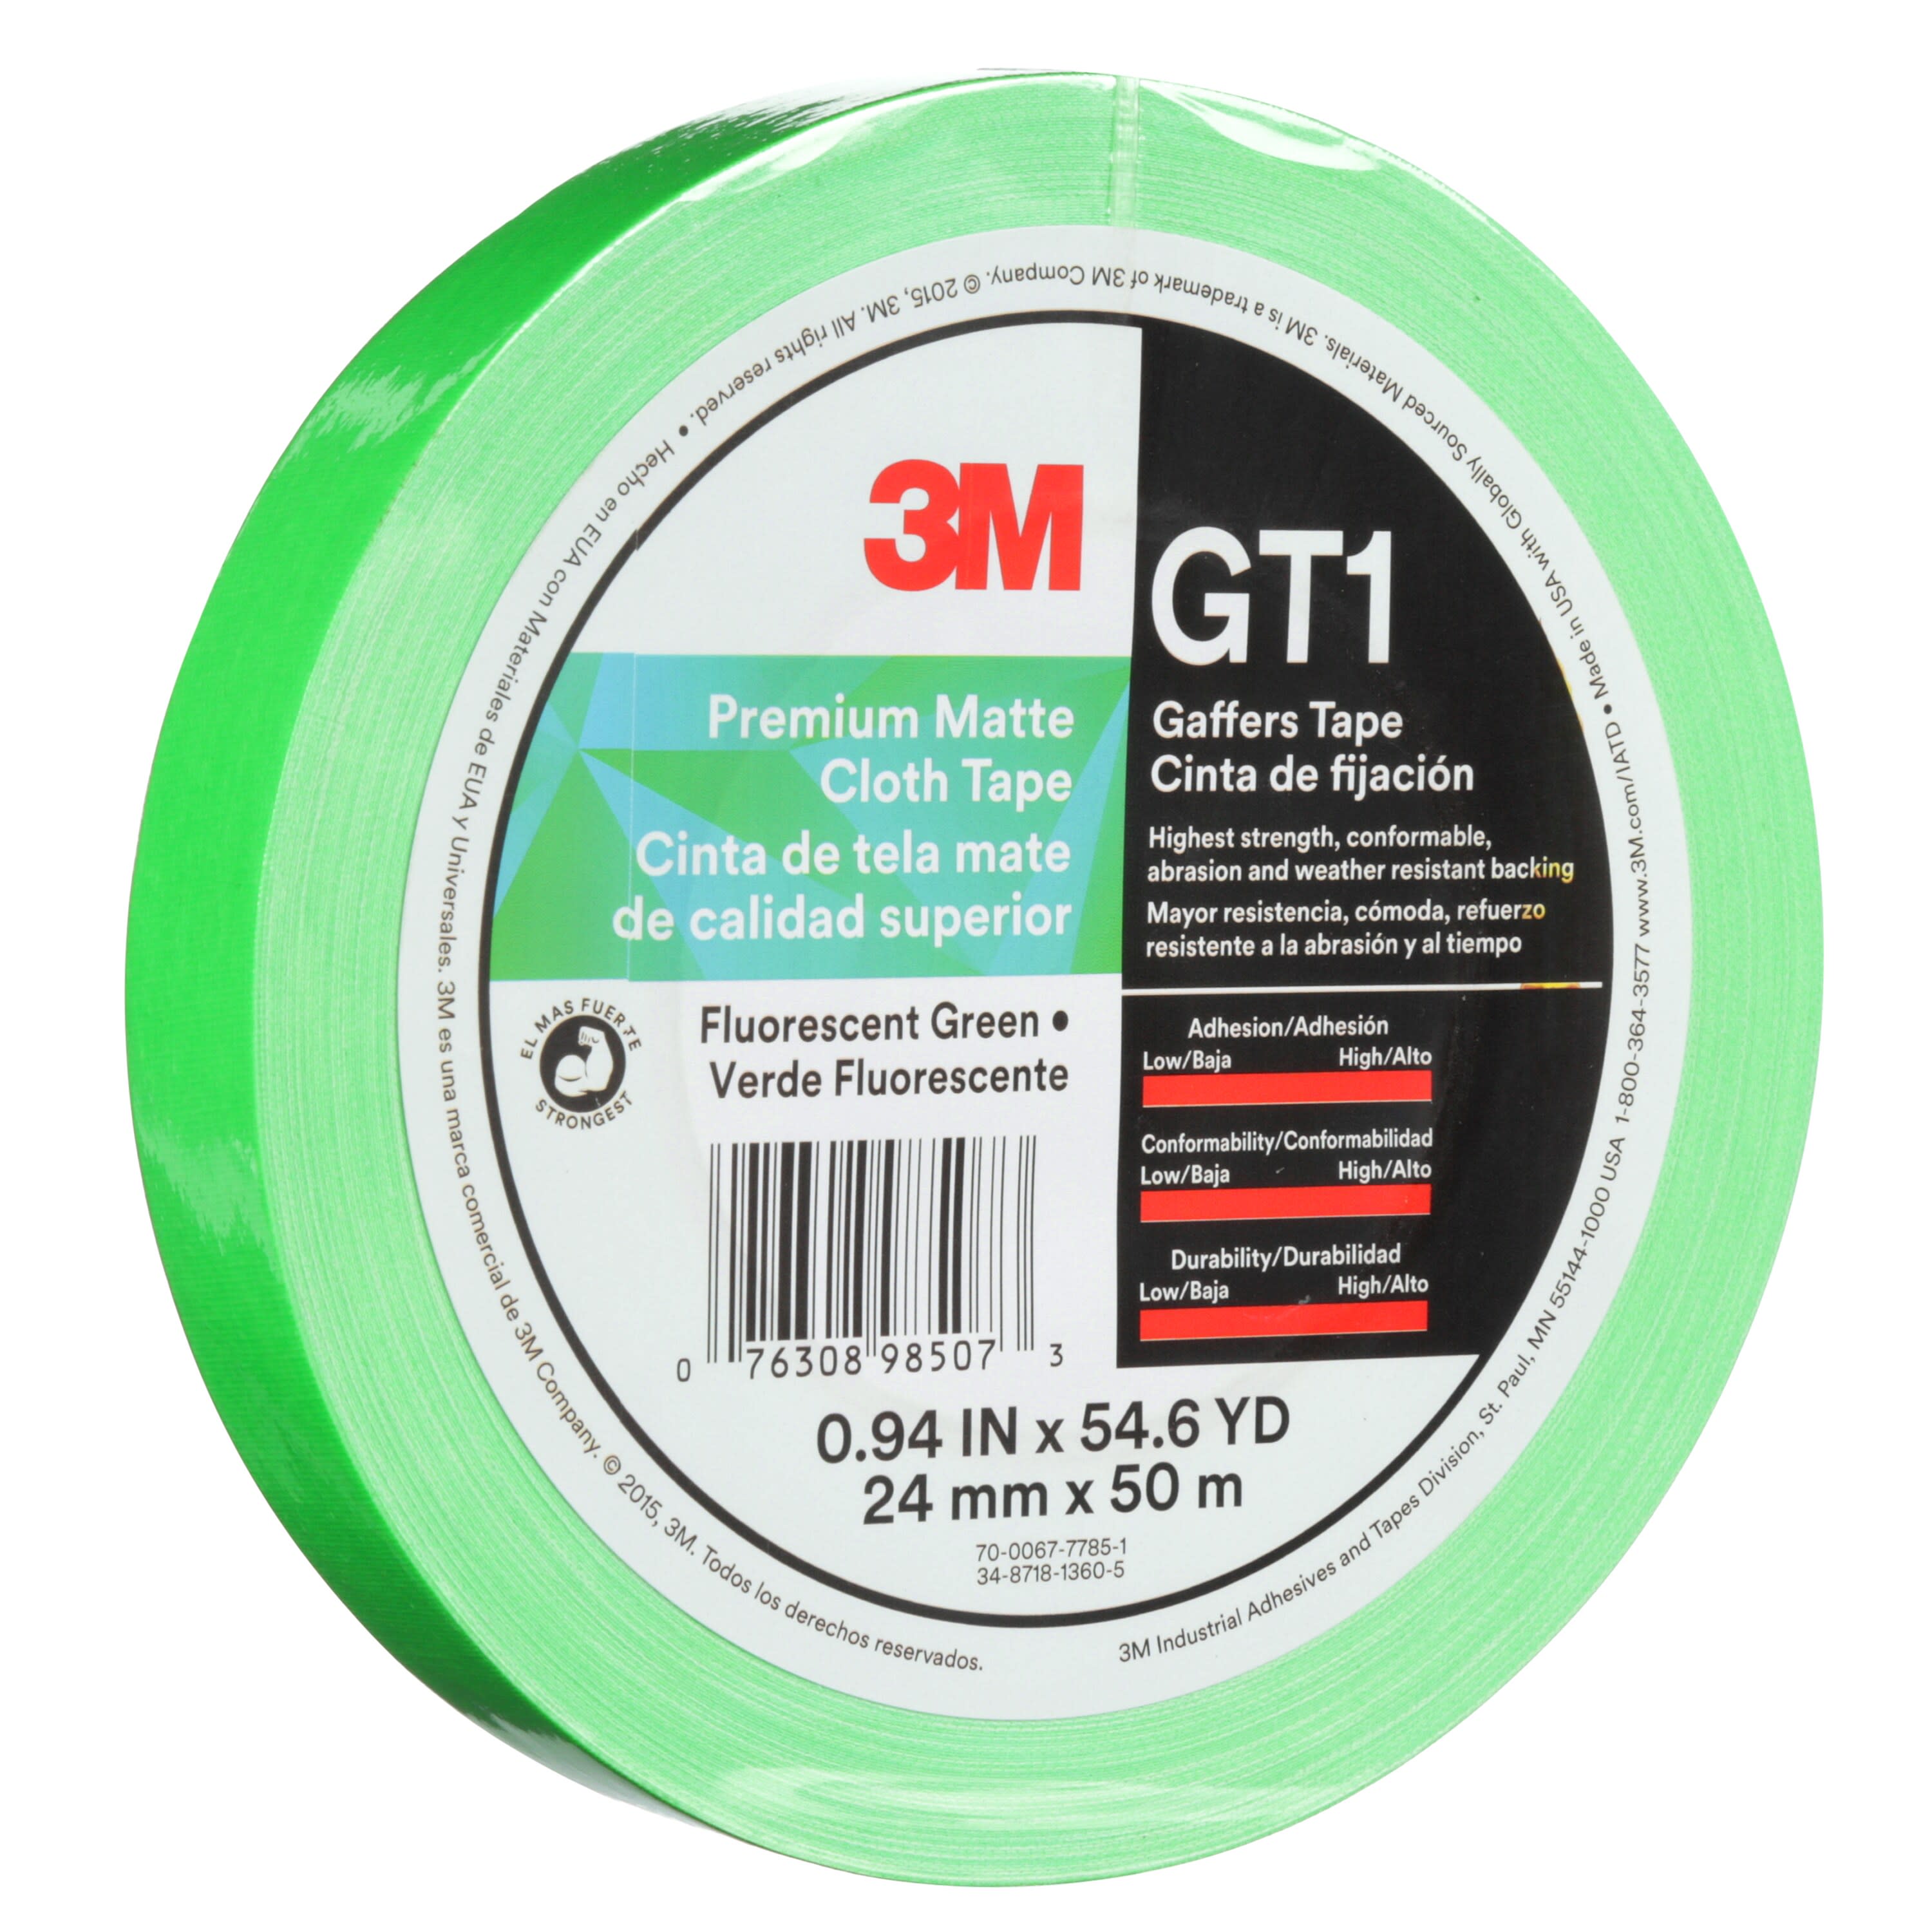 3M™ Premium Matte Cloth (Gaffers) Tape GT1, Fluorescent Green, 24 mm x
50 m, 11 mil, 48 per case